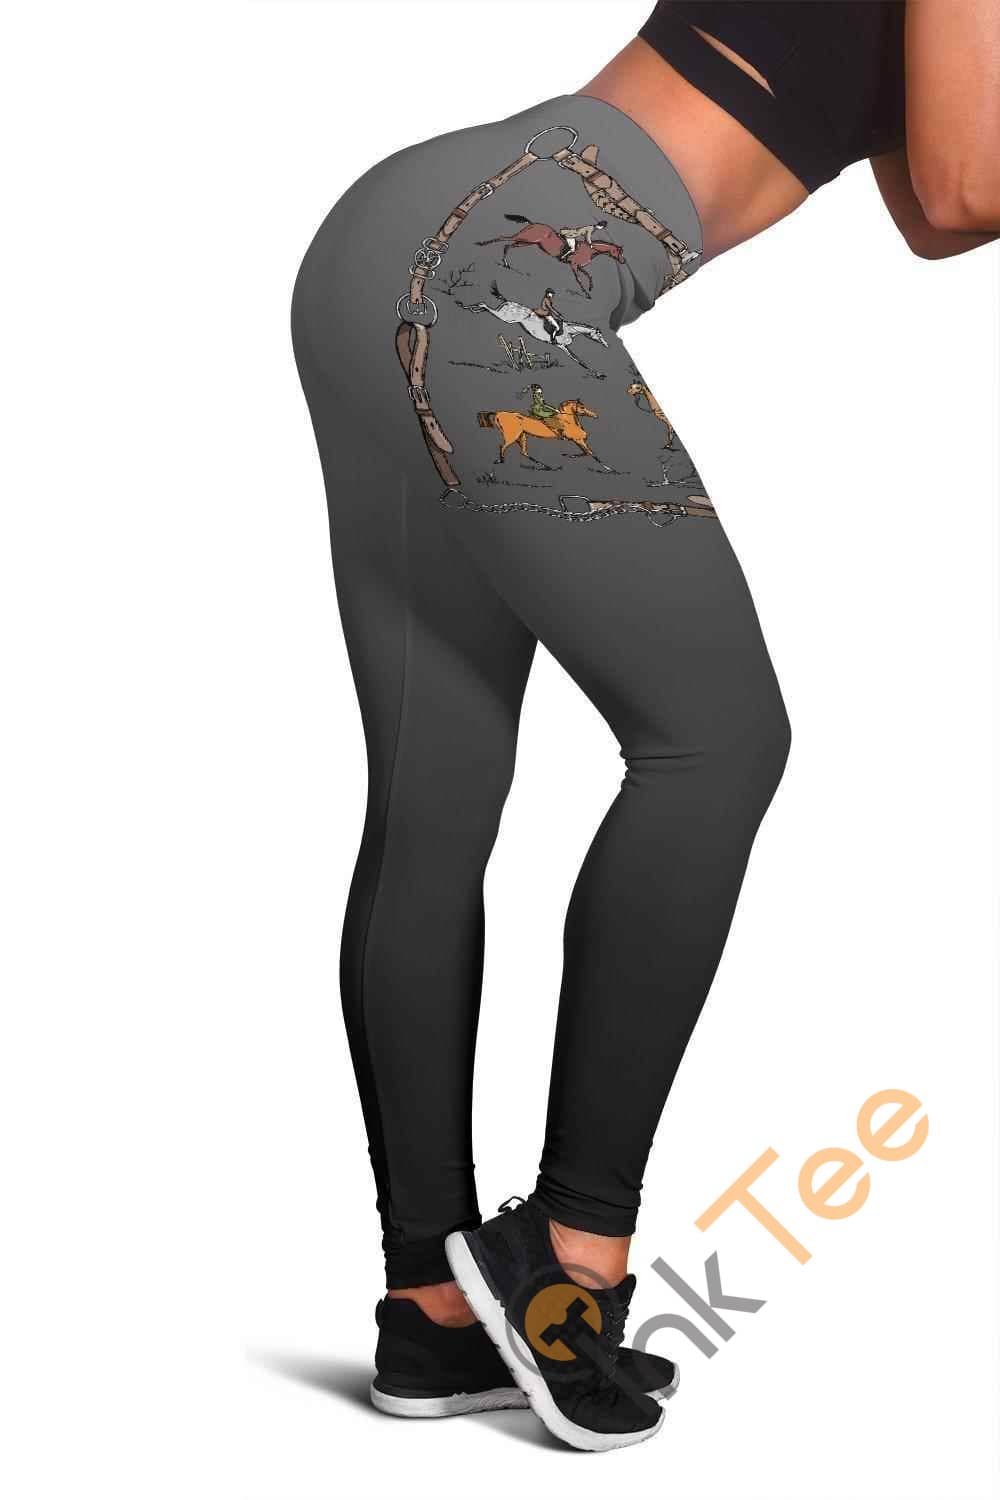 Inktee Store - Eventing Horse 3D All Over Print For Yoga Fitness Women'S Leggings Image